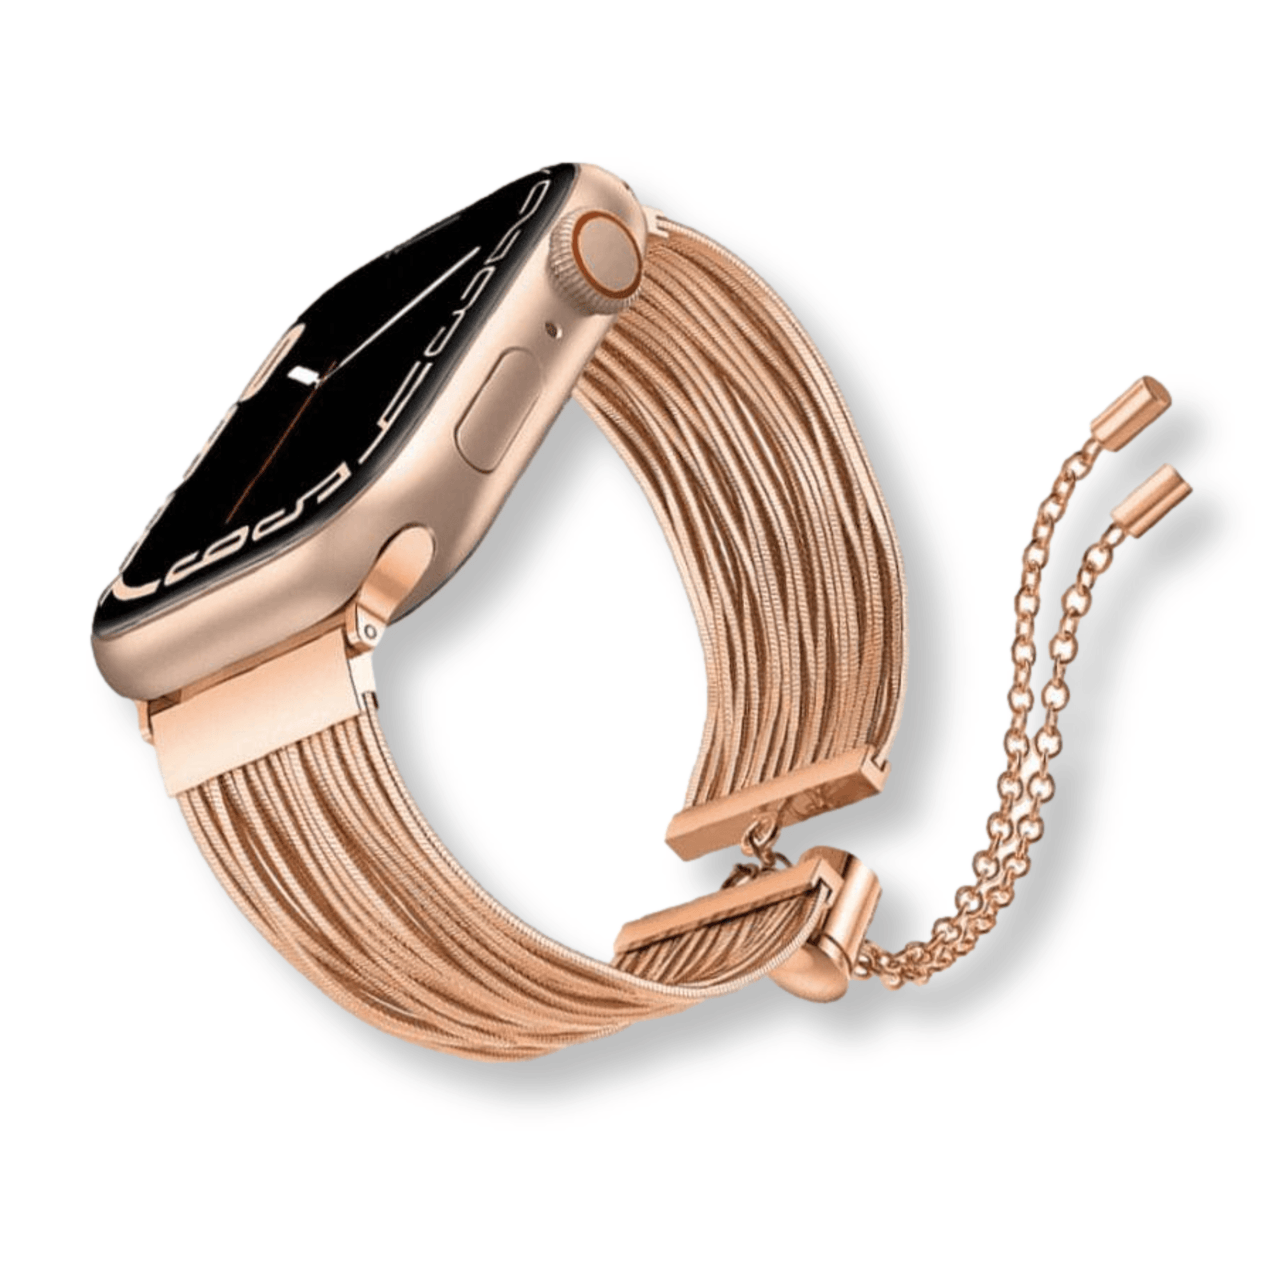 Steel Chain Bracelet for Apple Watch - watchband.direct